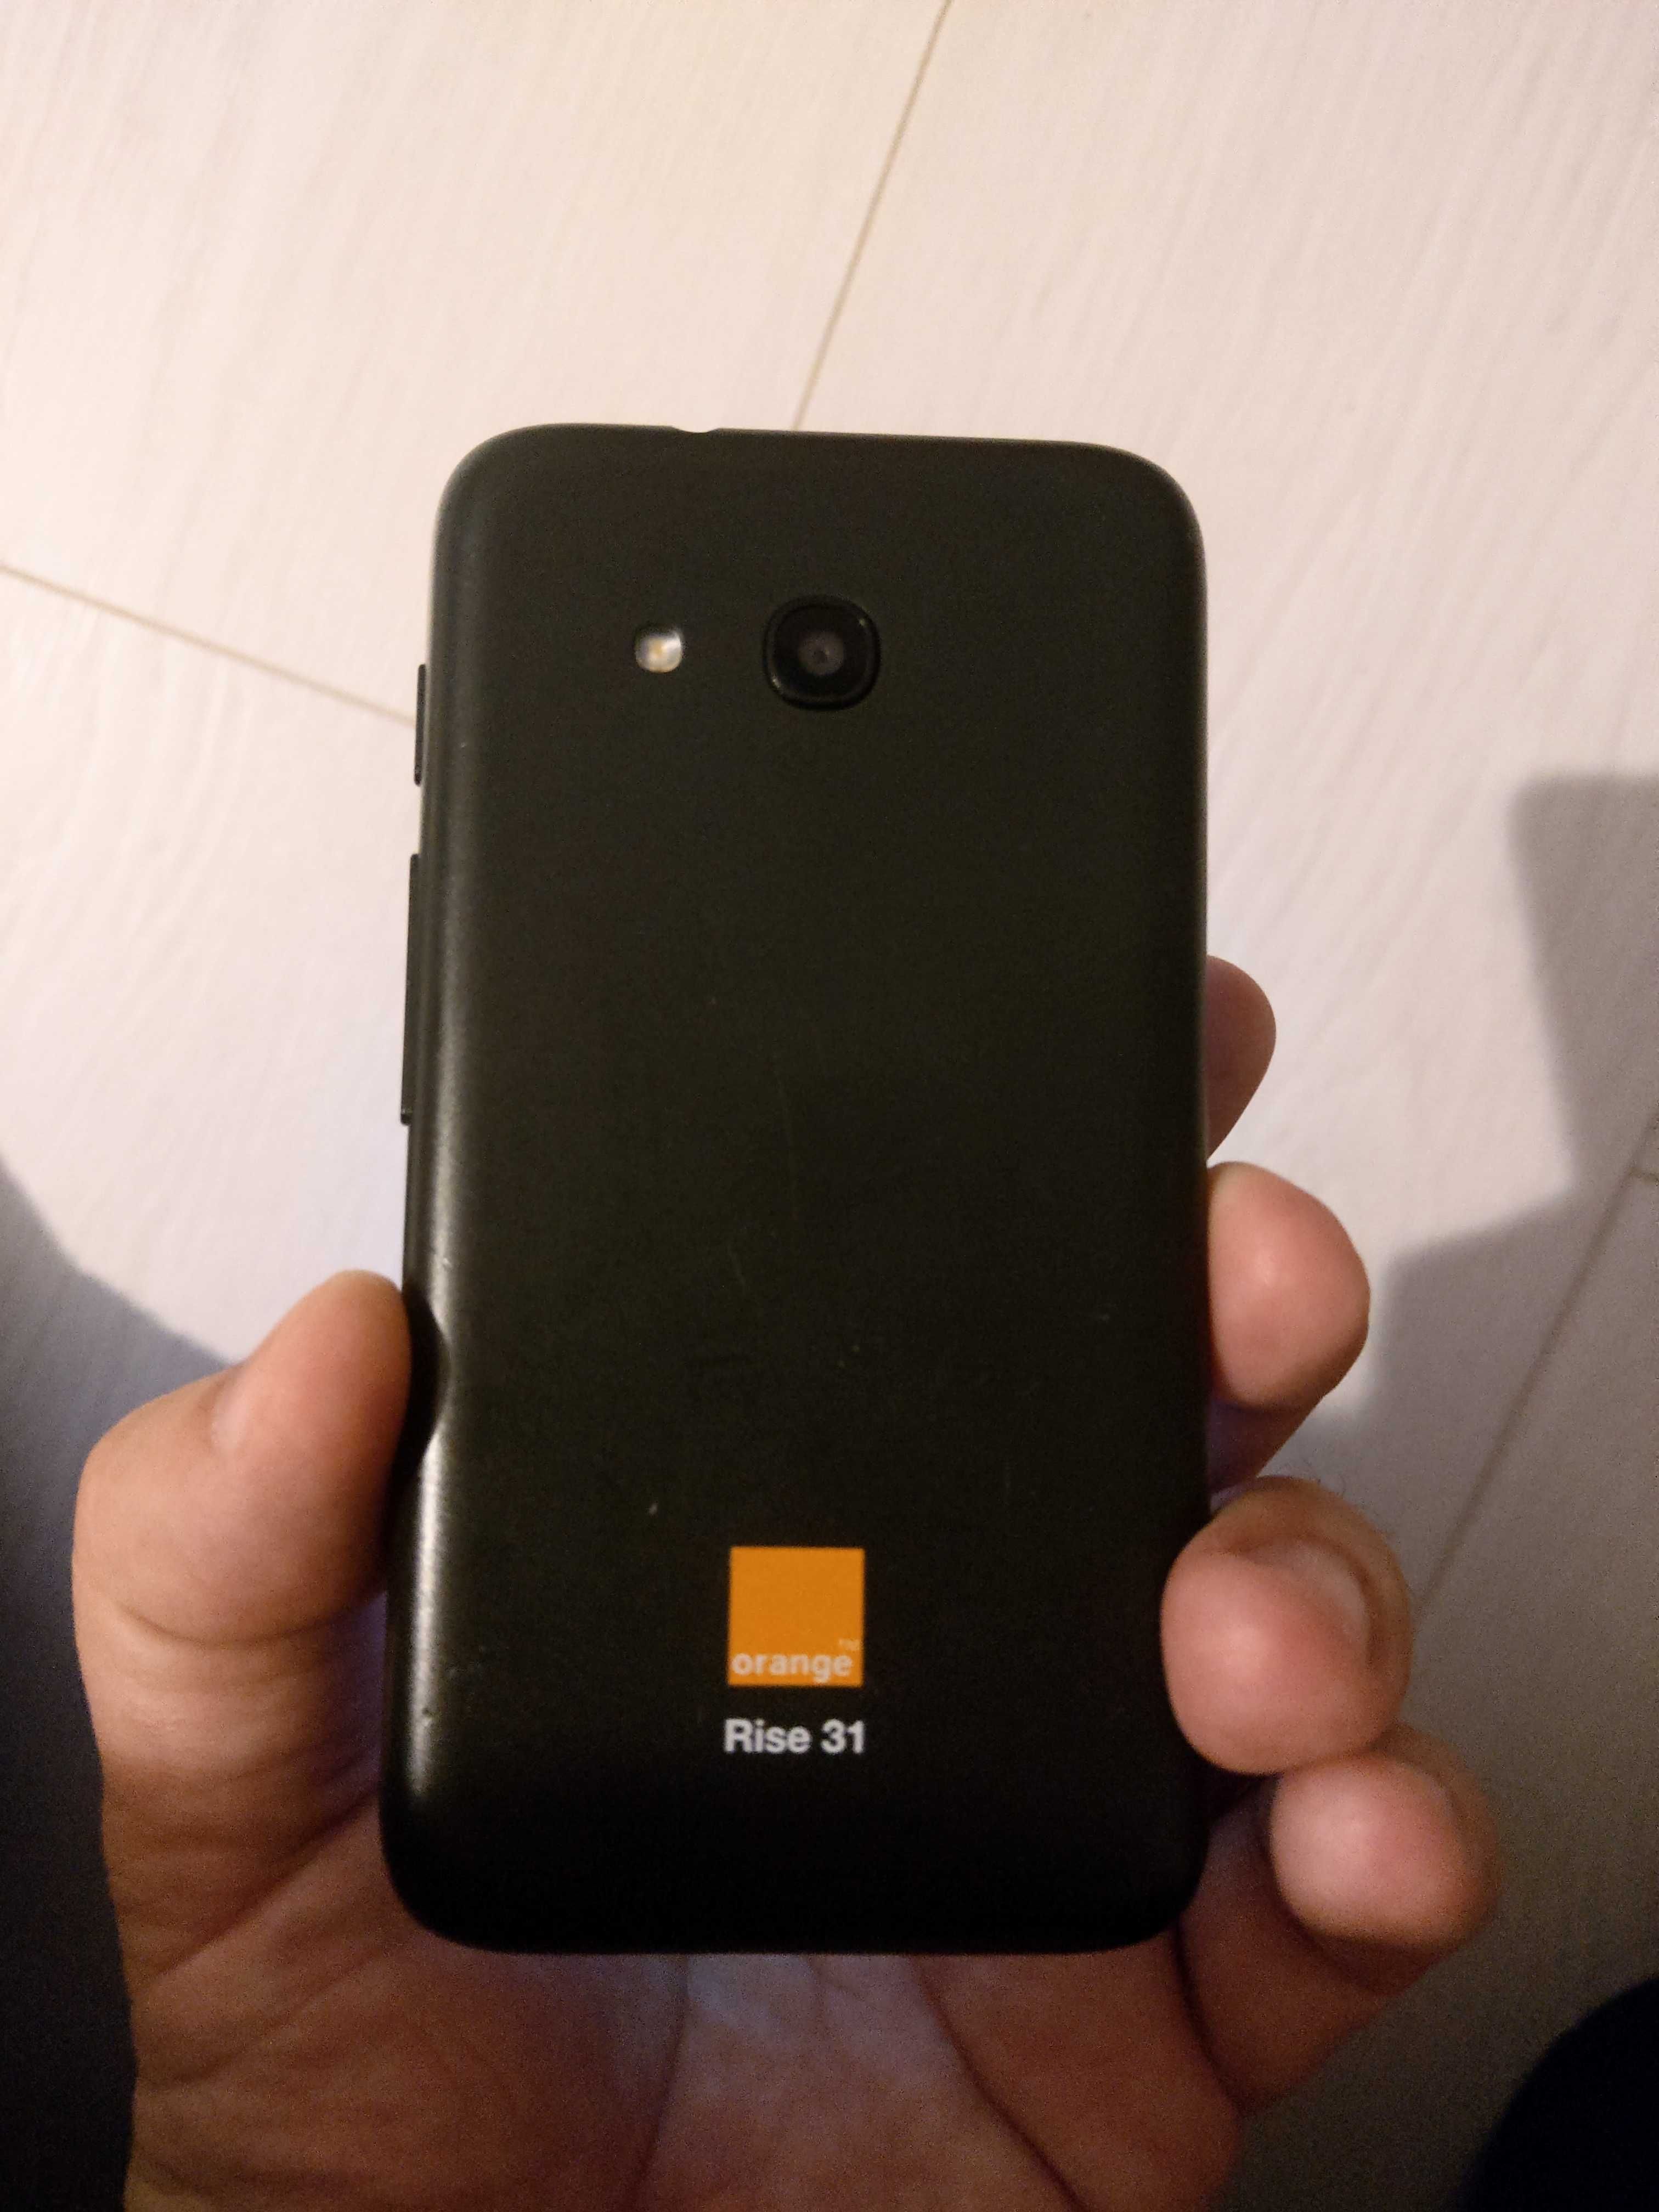 Telefon Alcatel orange rise 31 Android 6 decodat